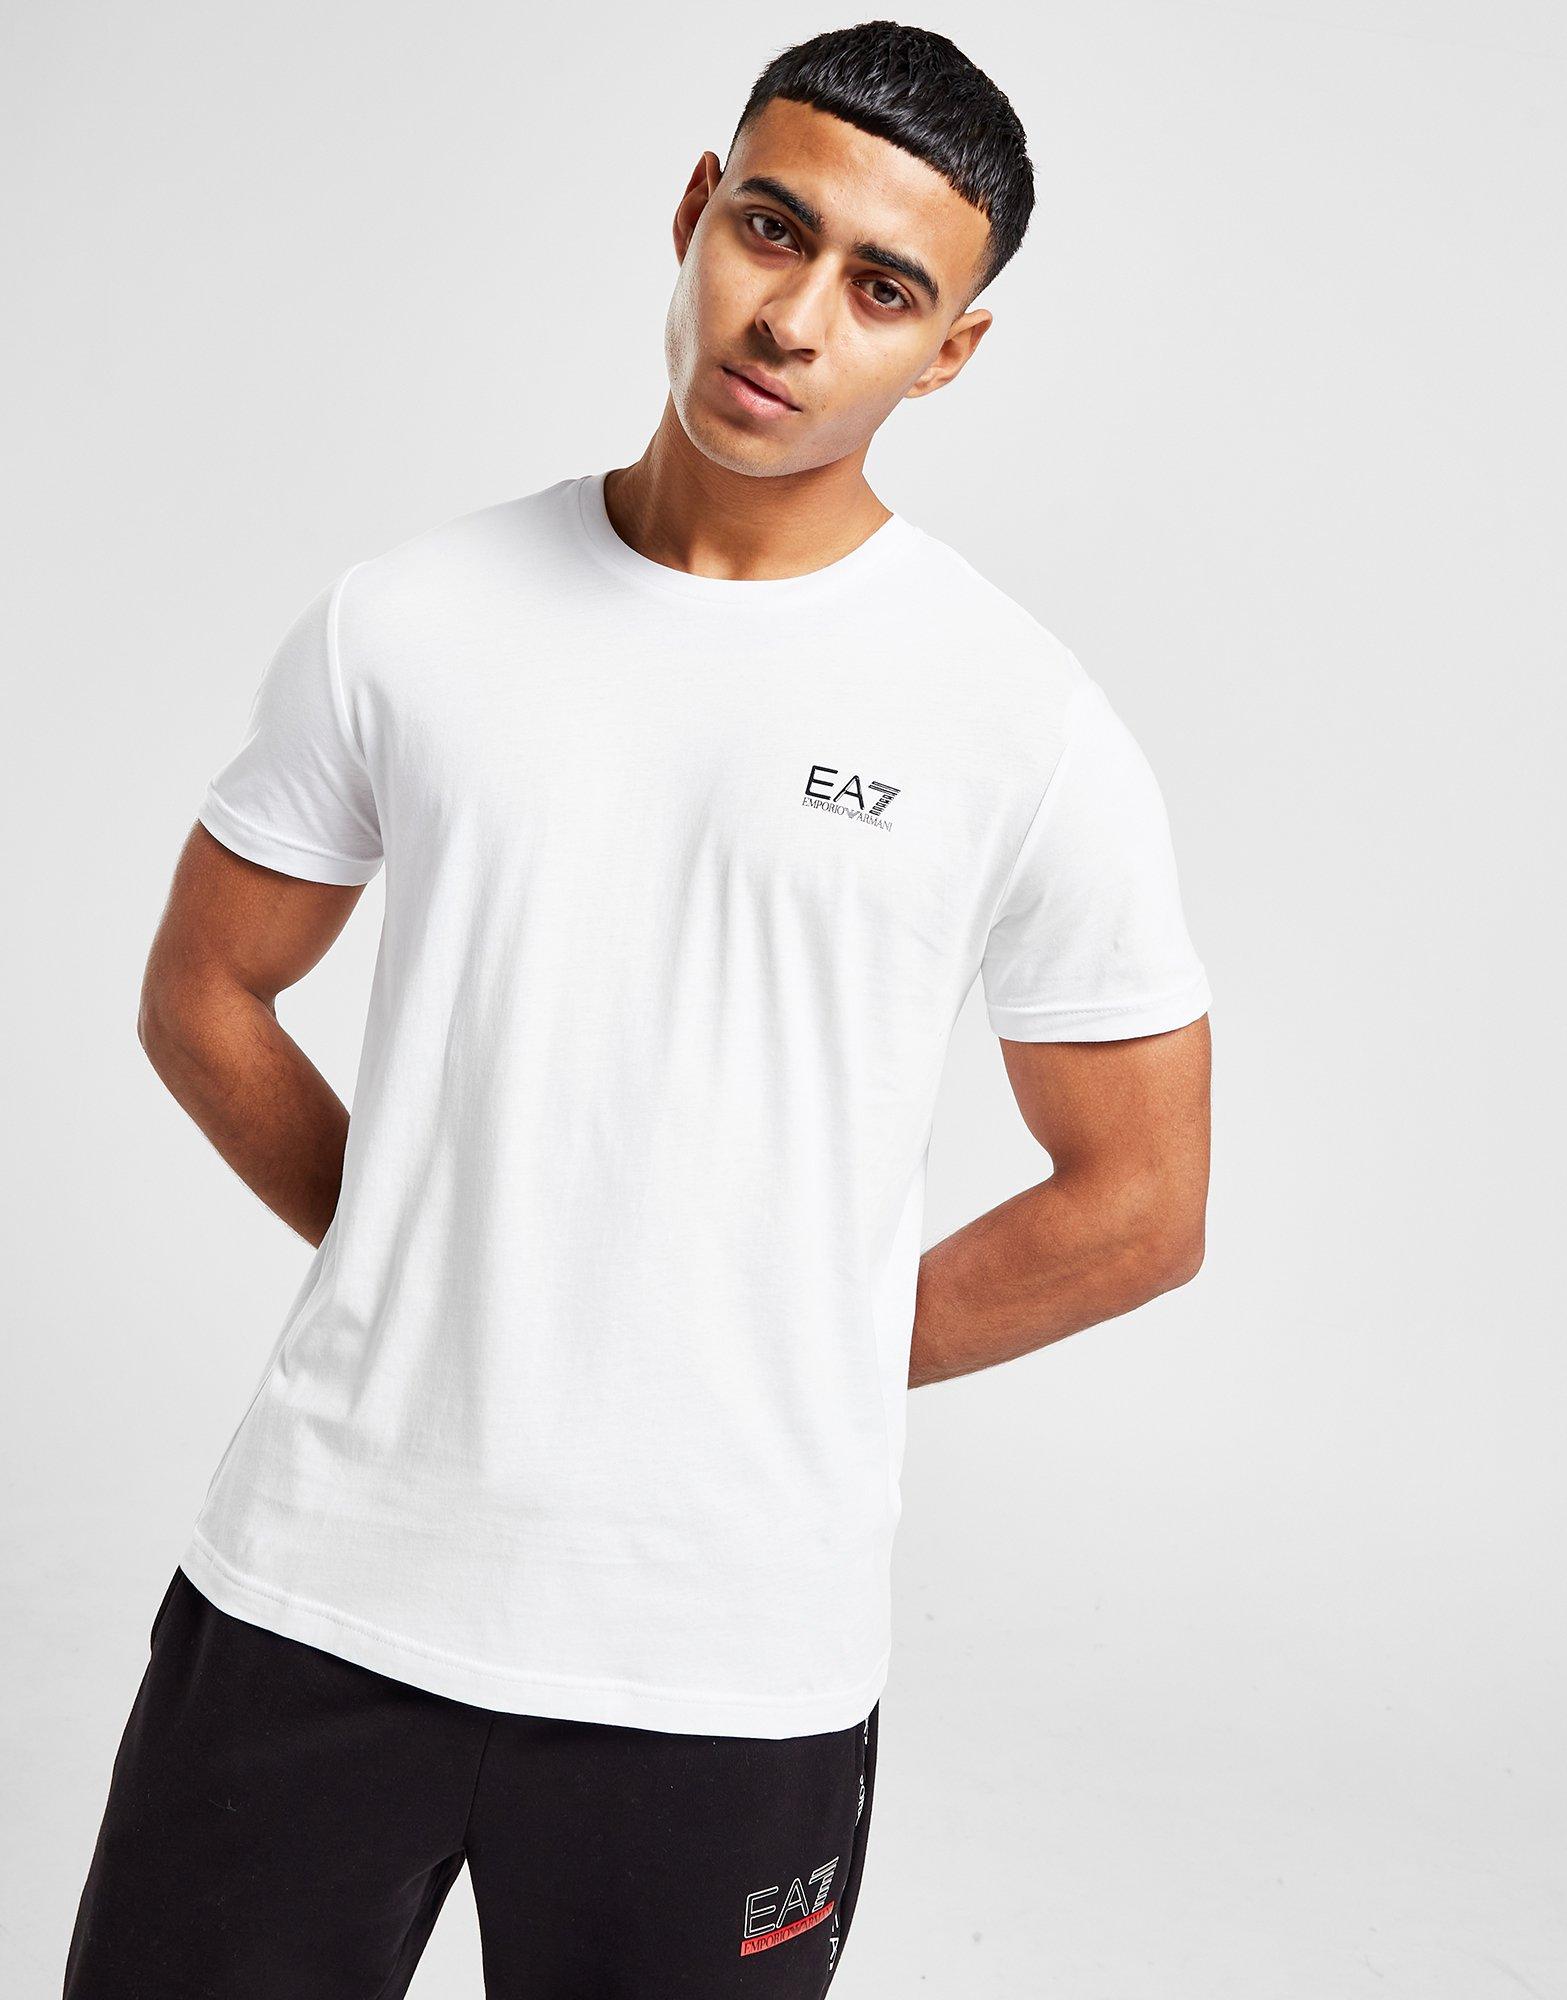 Ea7 Emporio Armani T Shirt Low Price, Save 69% 